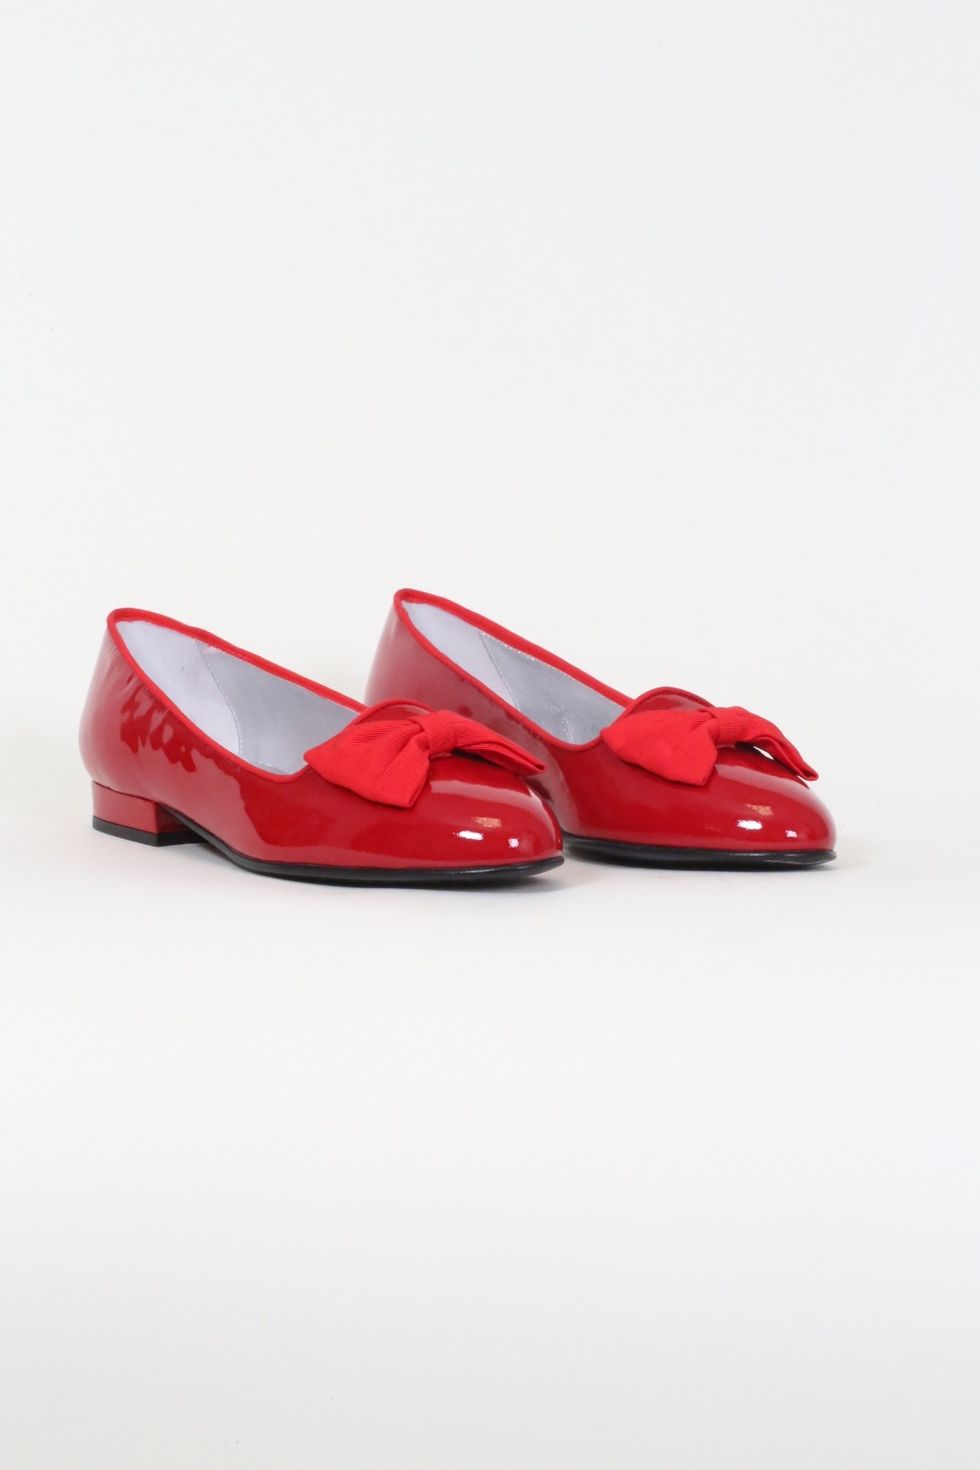 Footwear, Red, Shoe, Ballet flat, Sandal, High heels, 